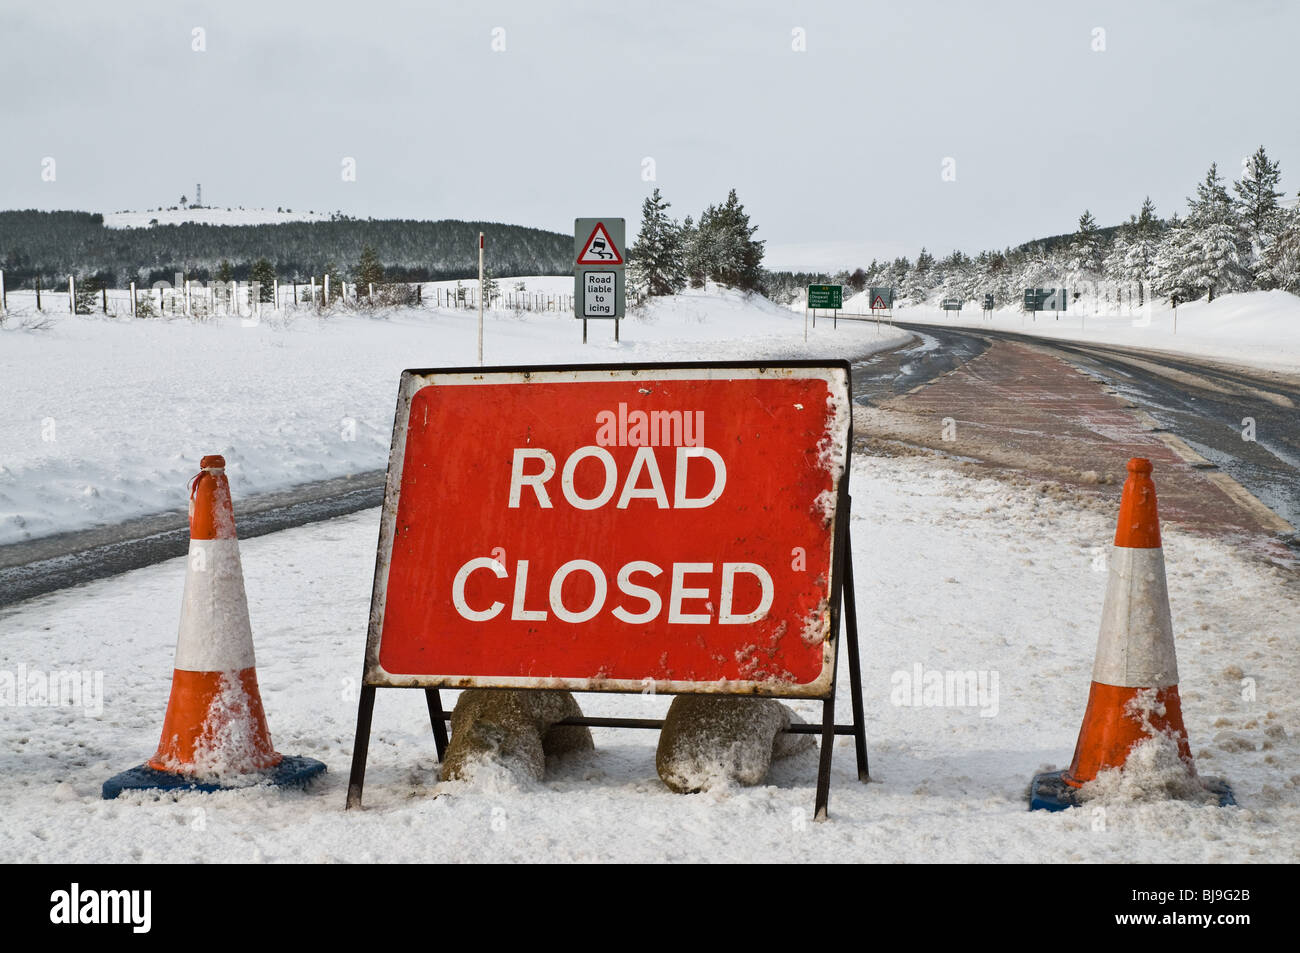 dh  A9 ROAD INVERNESSSHIRE Closed sign snow roadblock bollards snowy winter country road scotland disruption blocked scottish highlands uk impassable Stock Photo